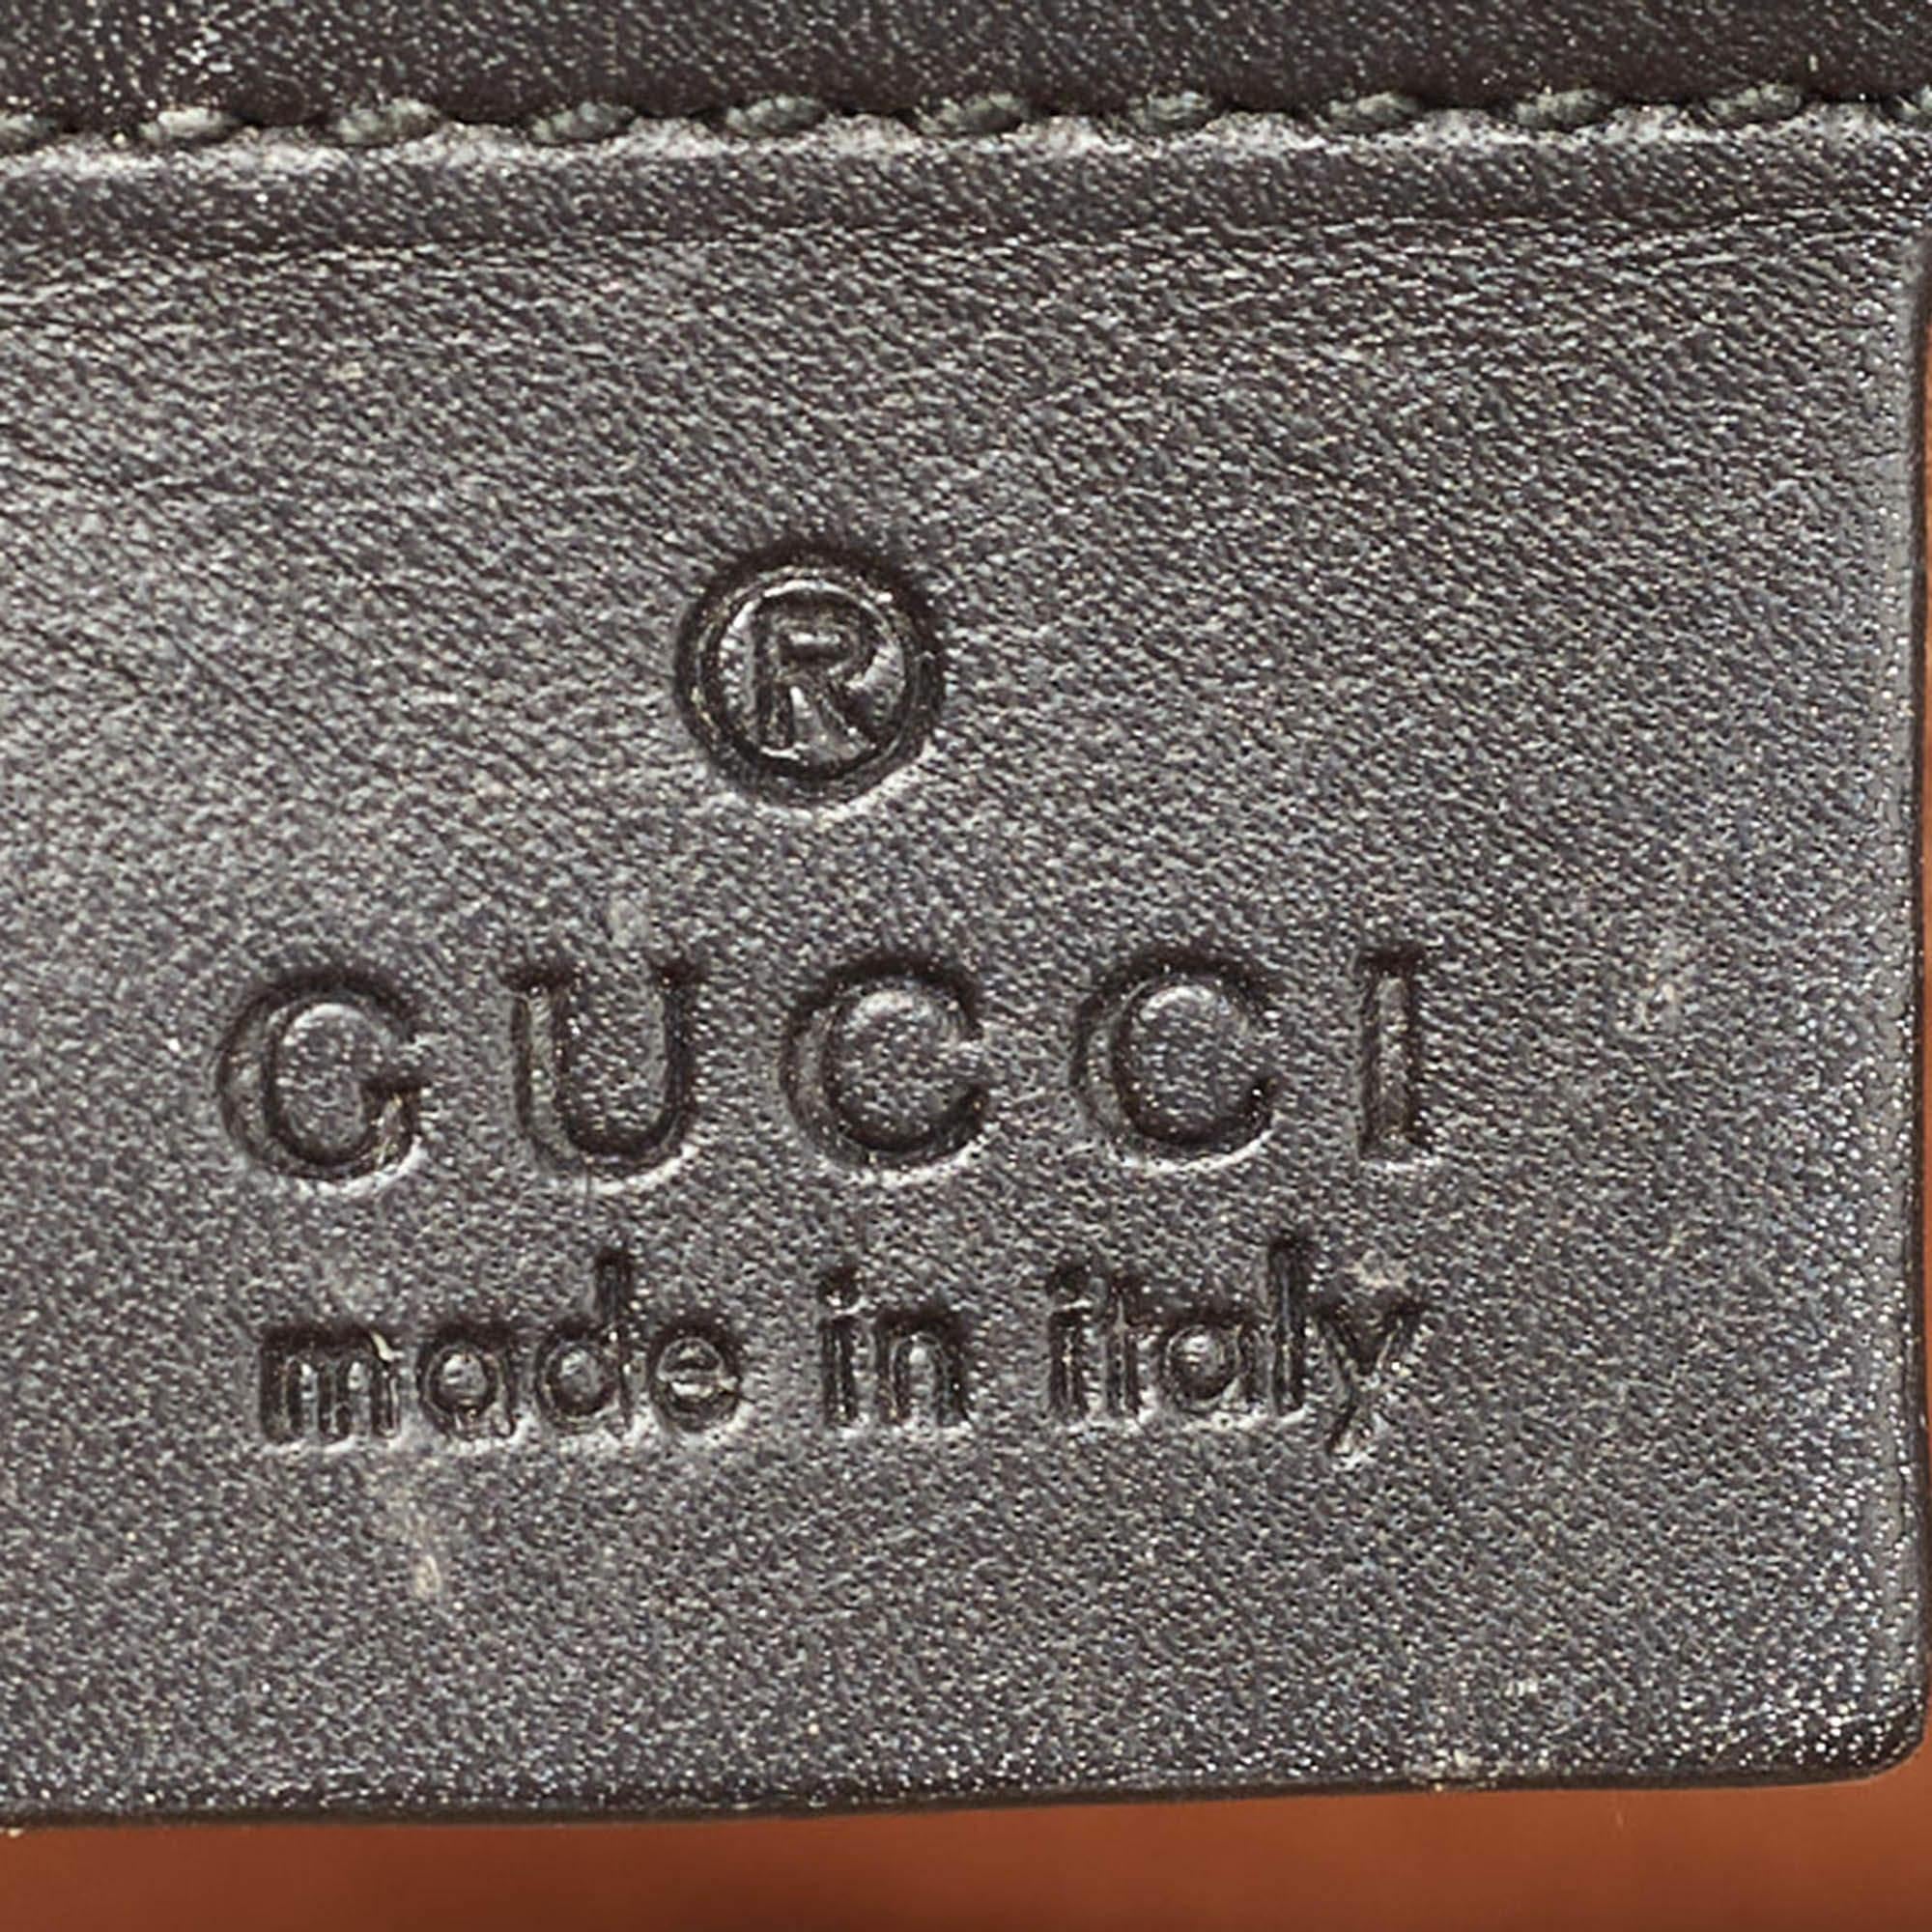 Gucci Black Leather Small Web Sylvie Shoulder Bag For Sale 5